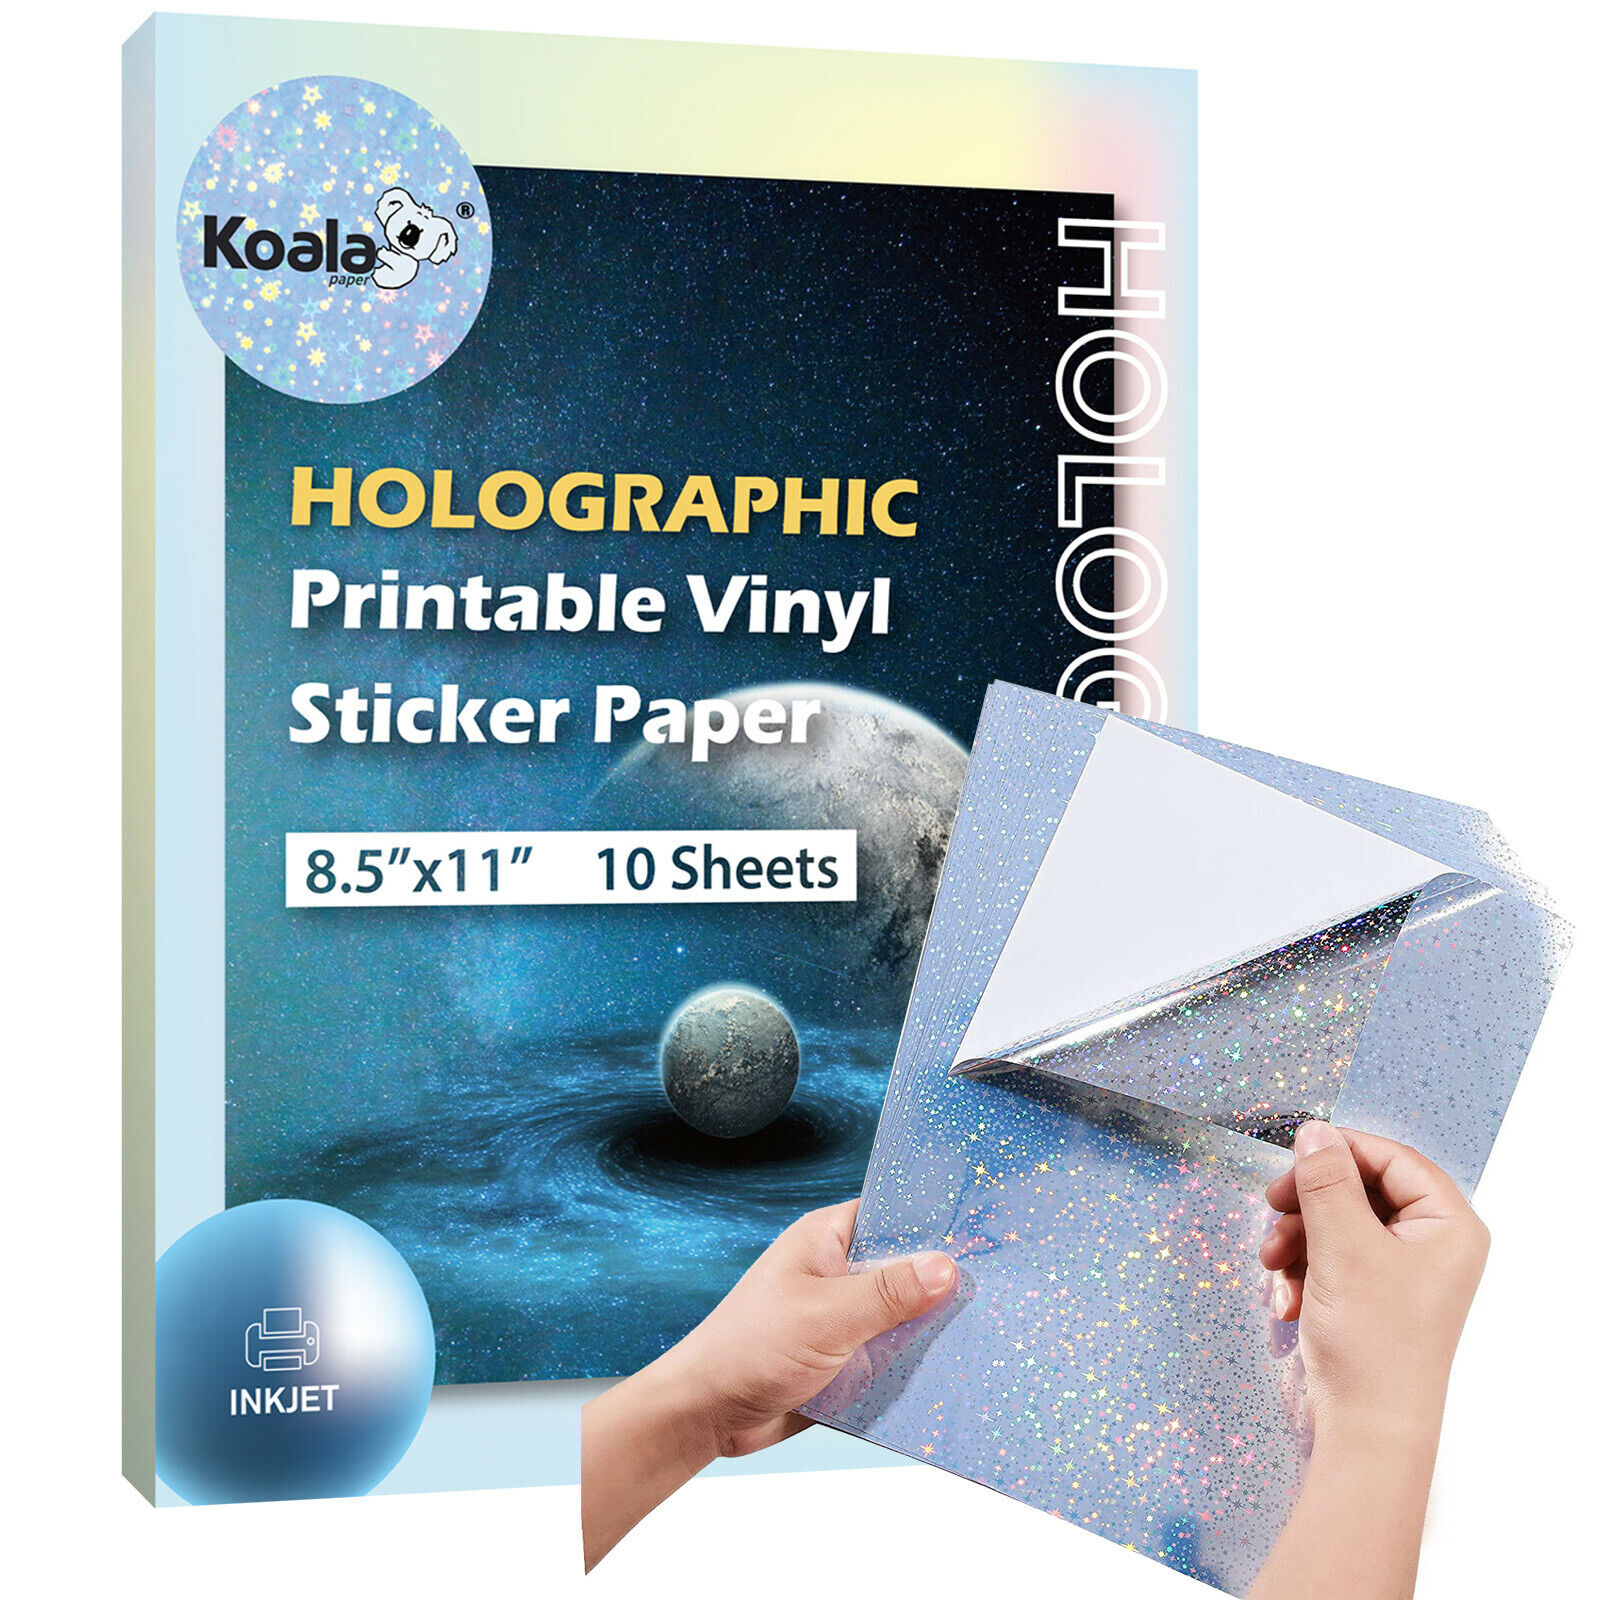 Koala Holographic Sticker Paper Inkjet Printer Cricut Waterproof Printable Vinyl